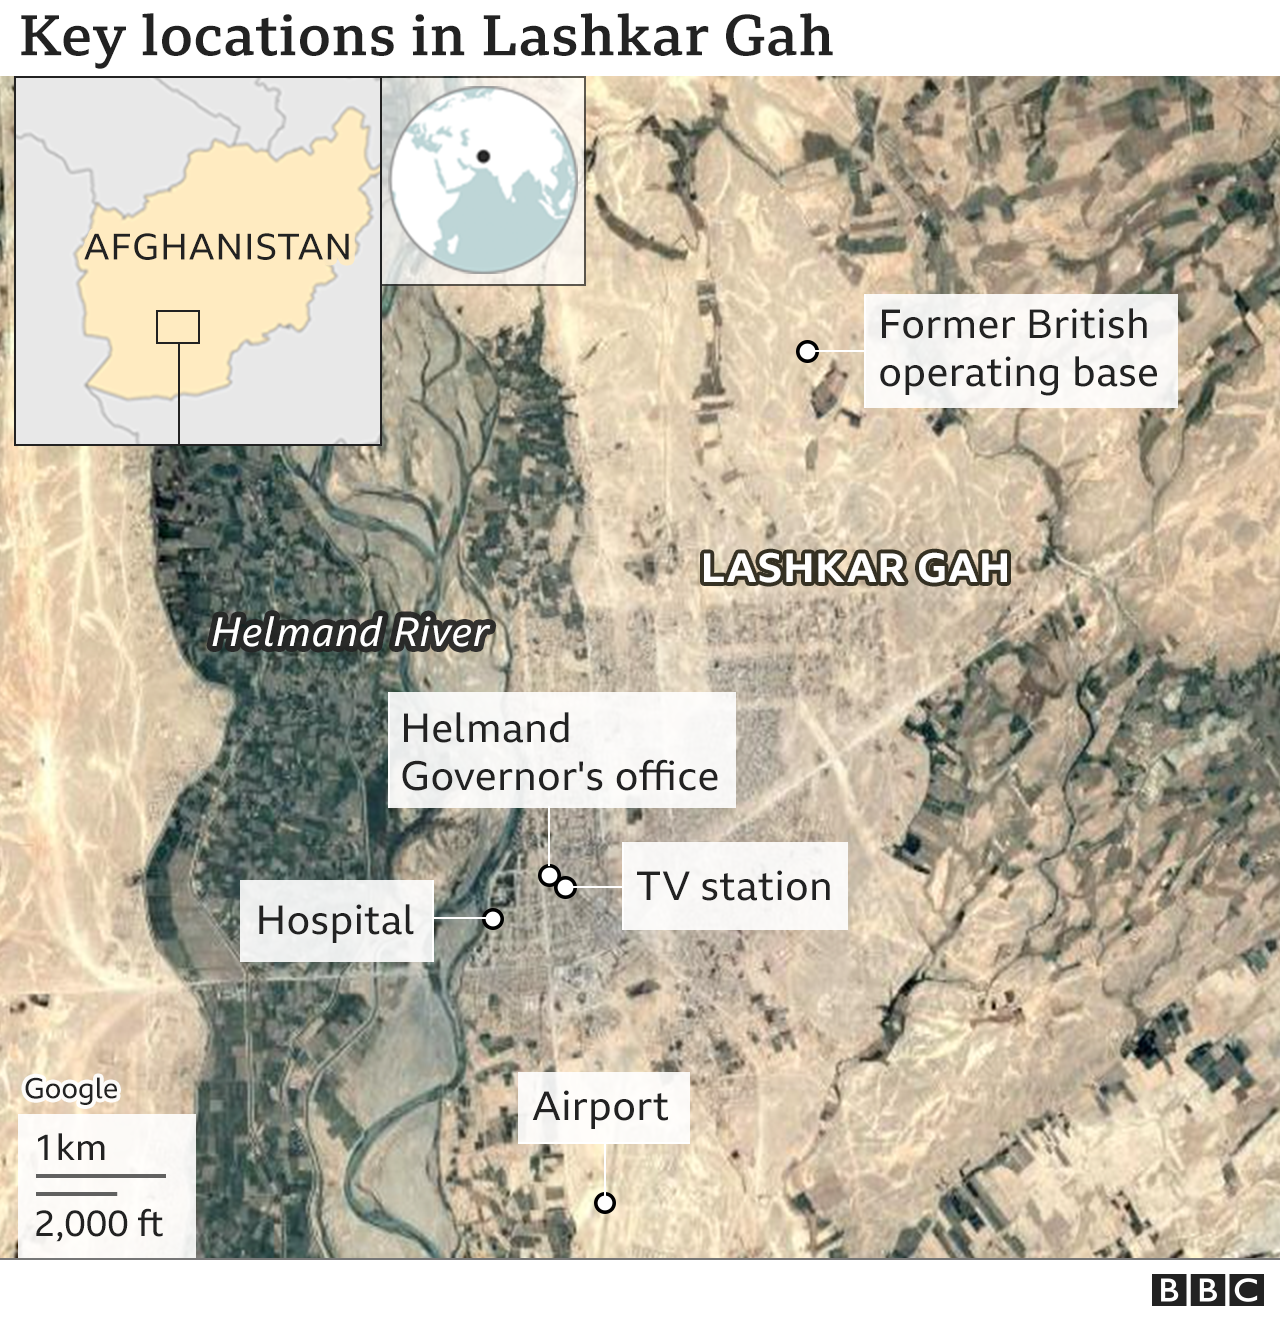 Map shows key locations in Lashkar Gah